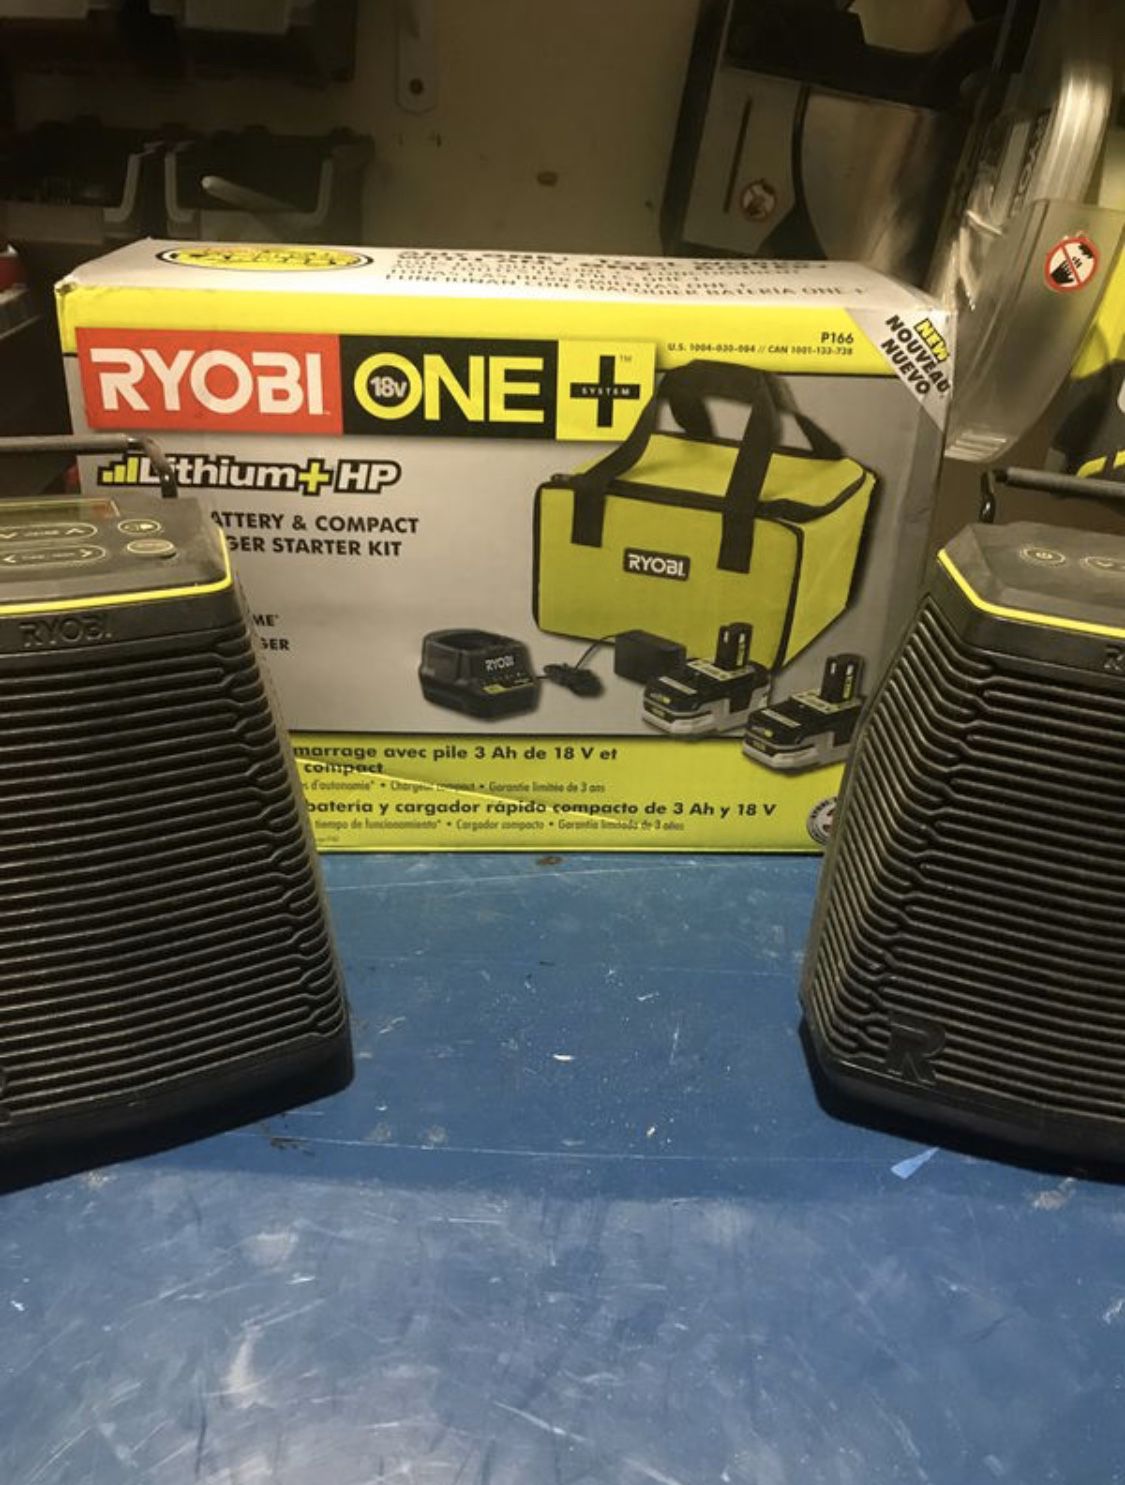 Ryobi speakers and batteries